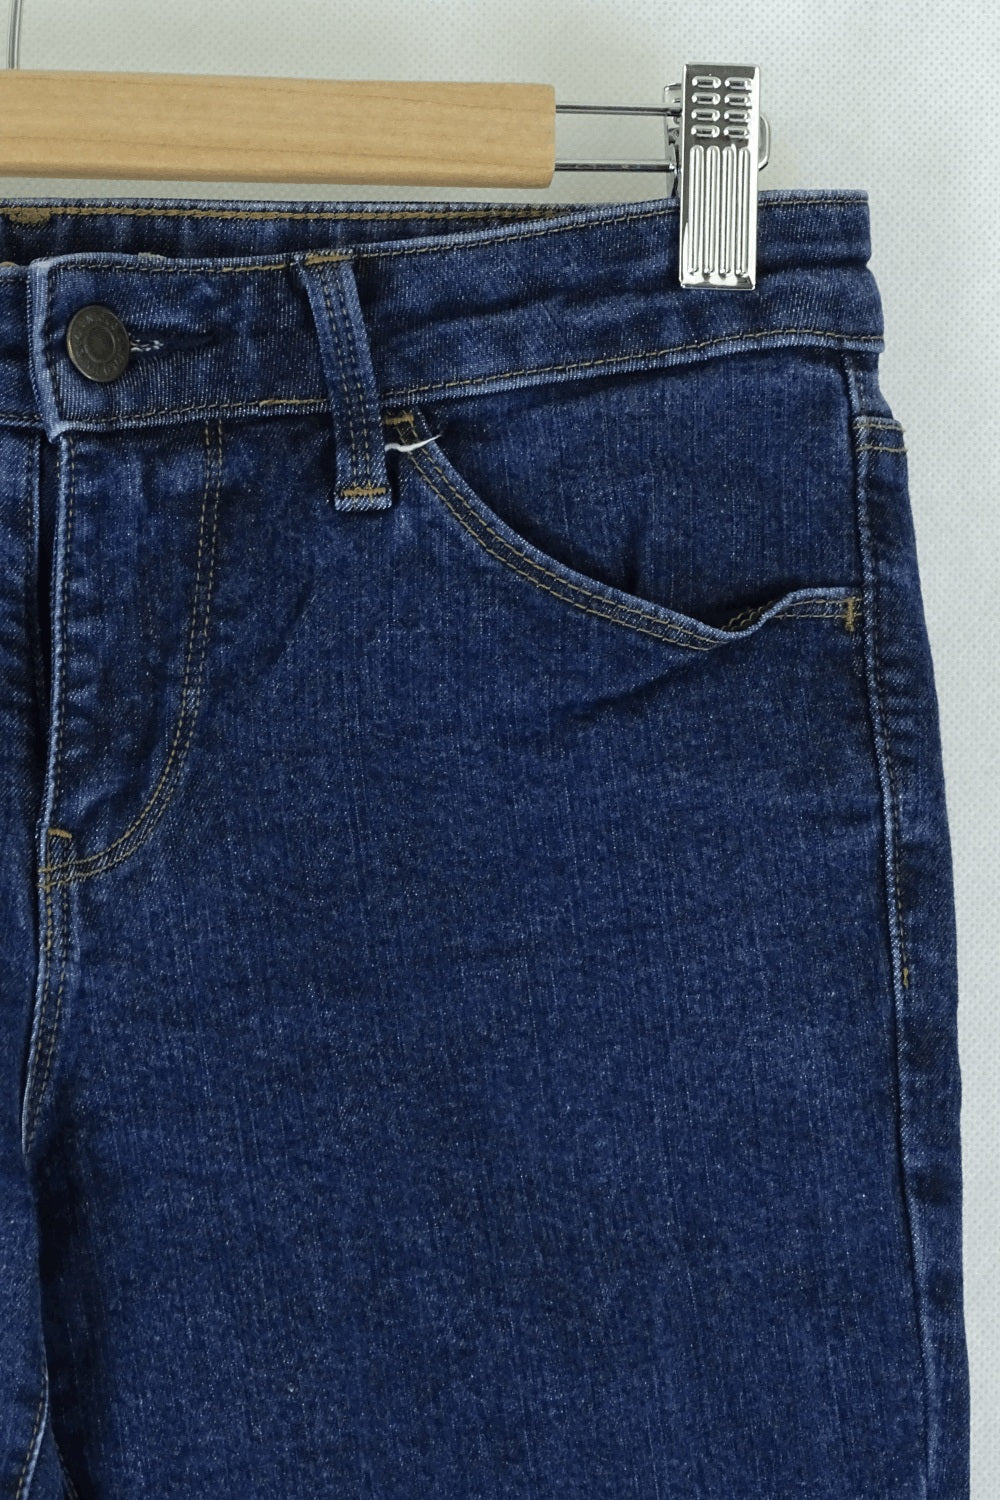 Uniqlo Mid Blue Jeans S